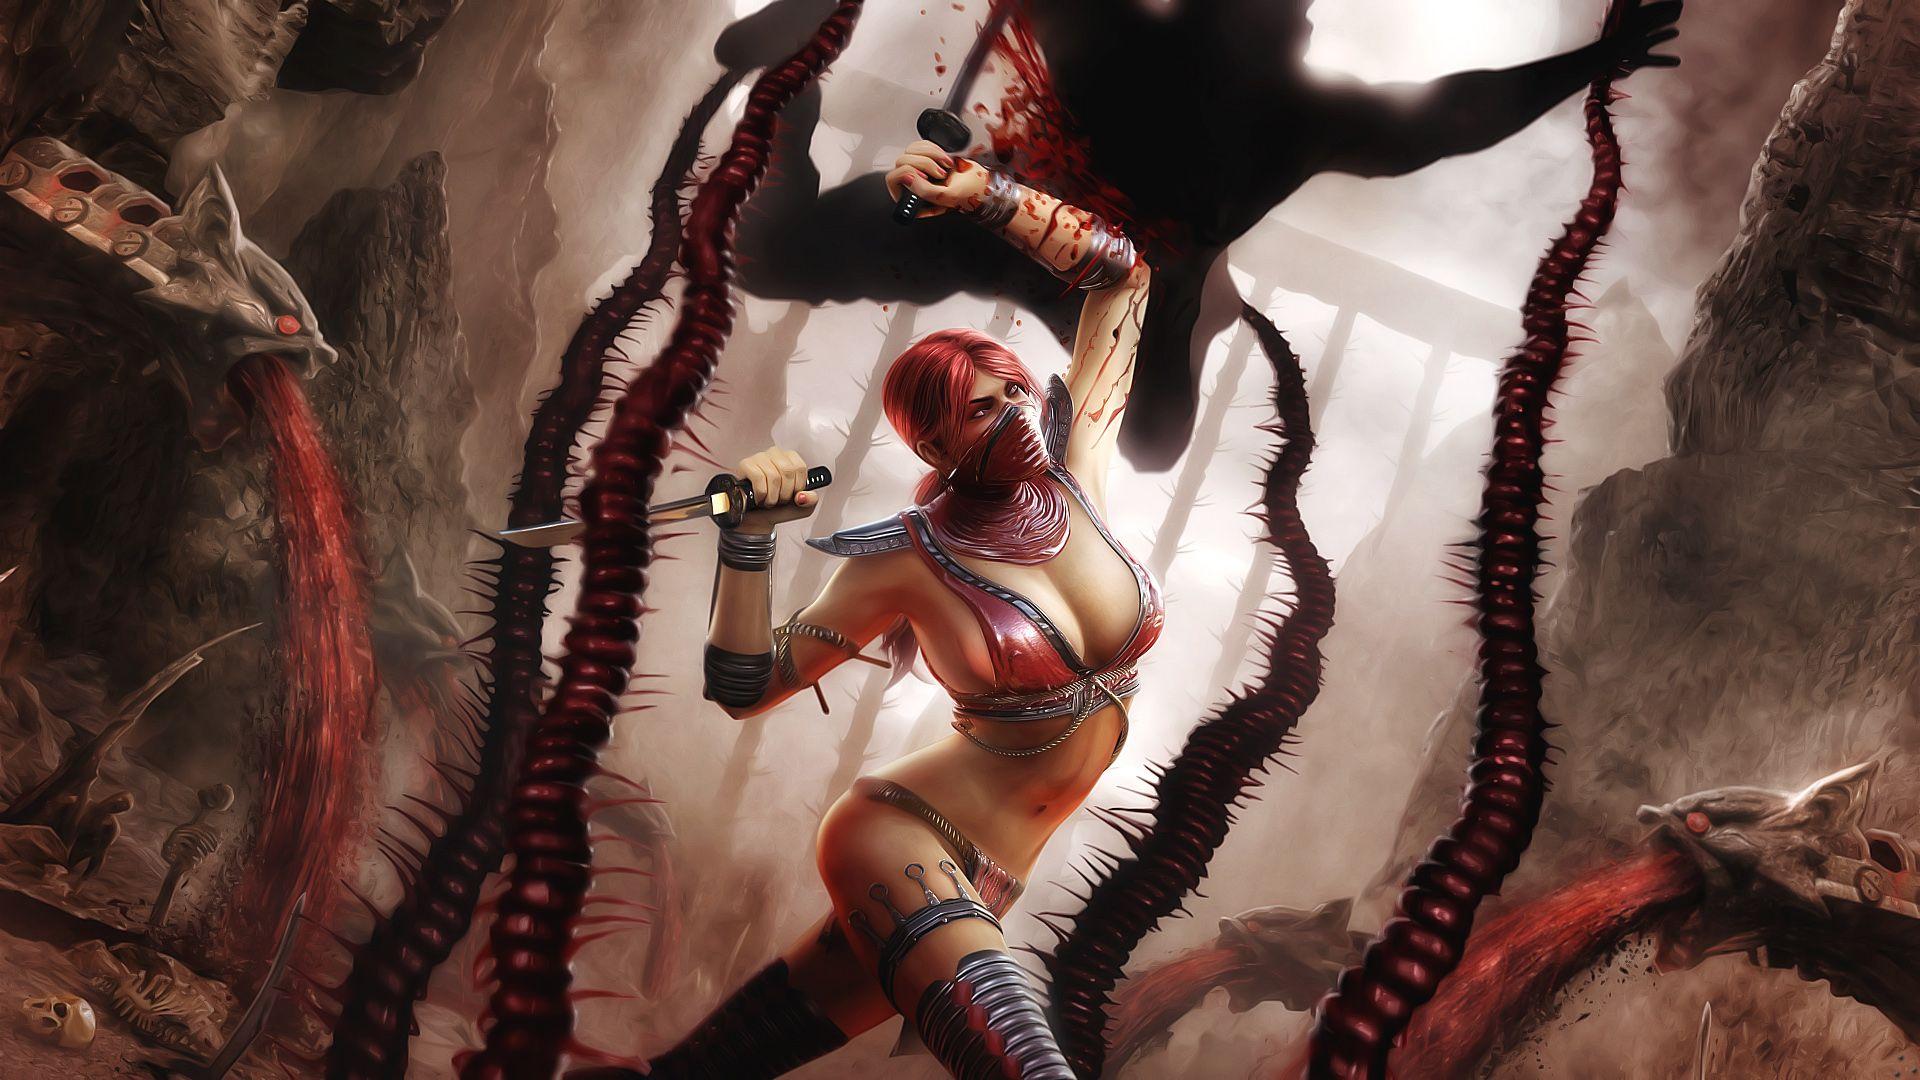 Skarlet in Mortal Kombat HD wallpaper. creative and fantasy